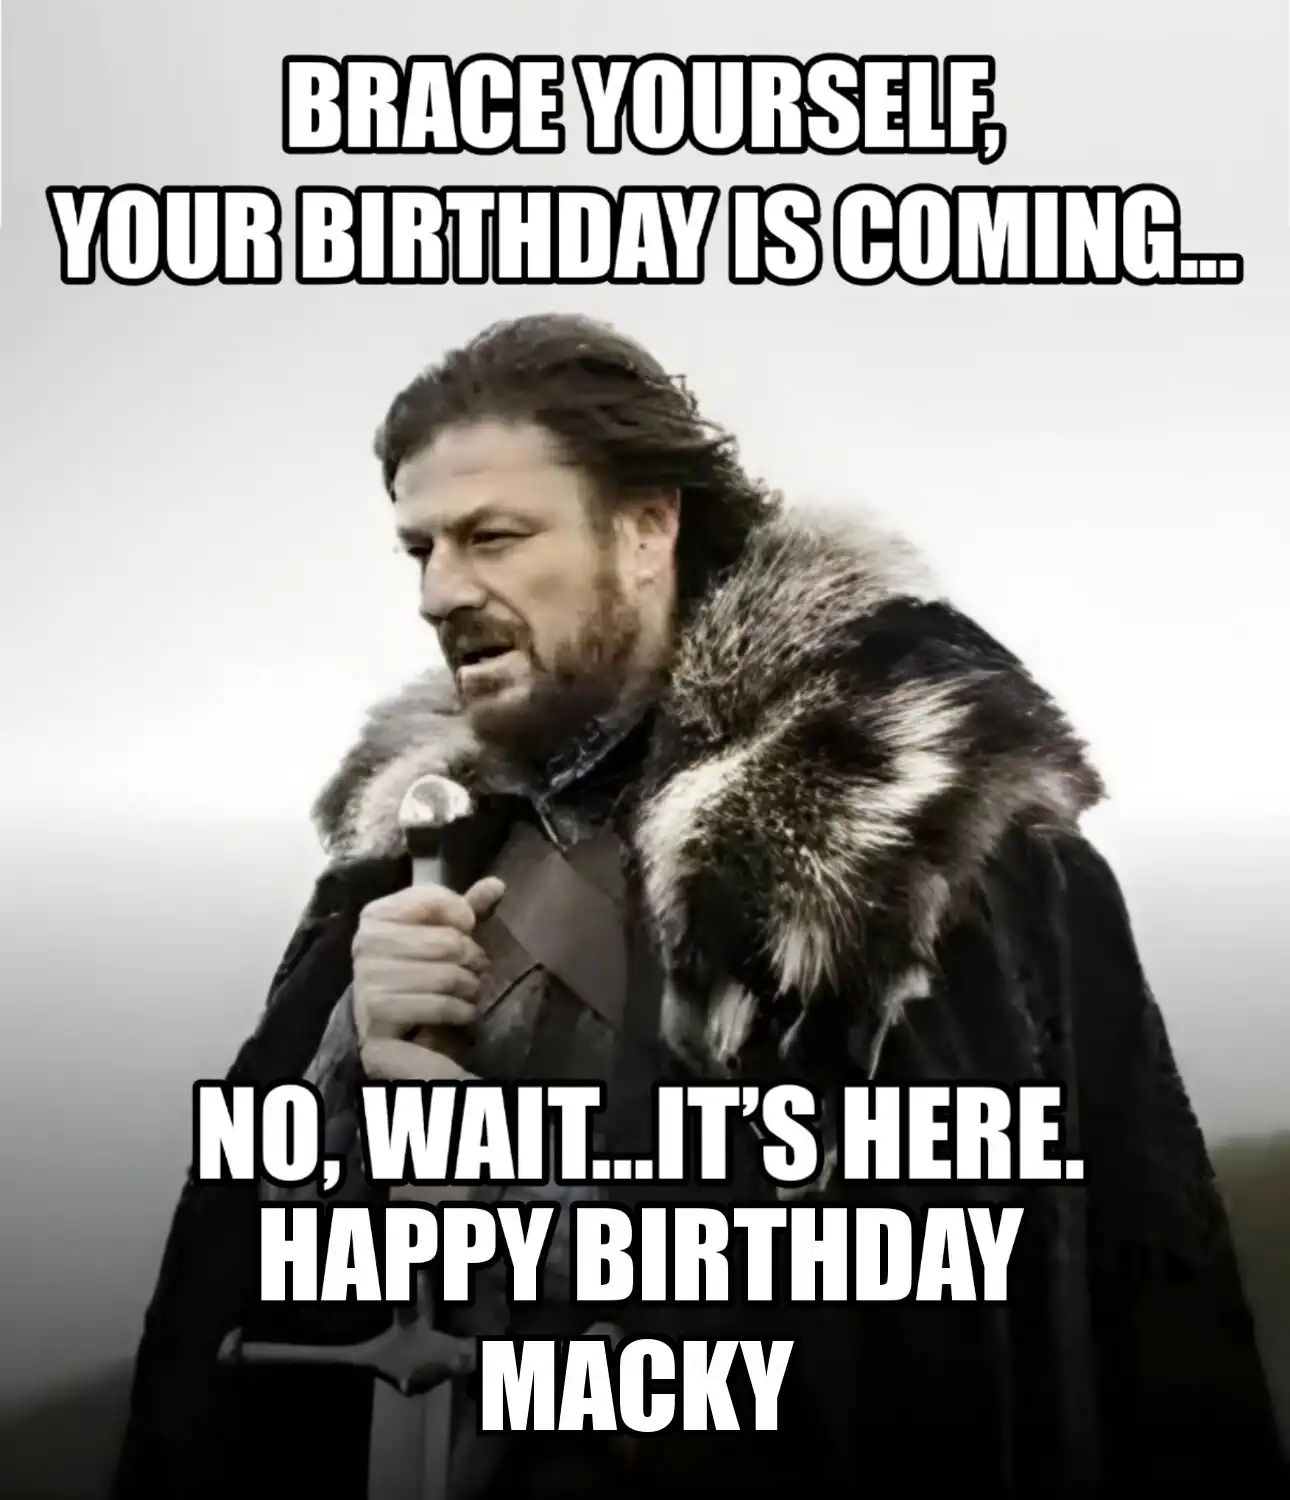 Happy Birthday Macky Brace Yourself Your Birthday Is Coming Meme